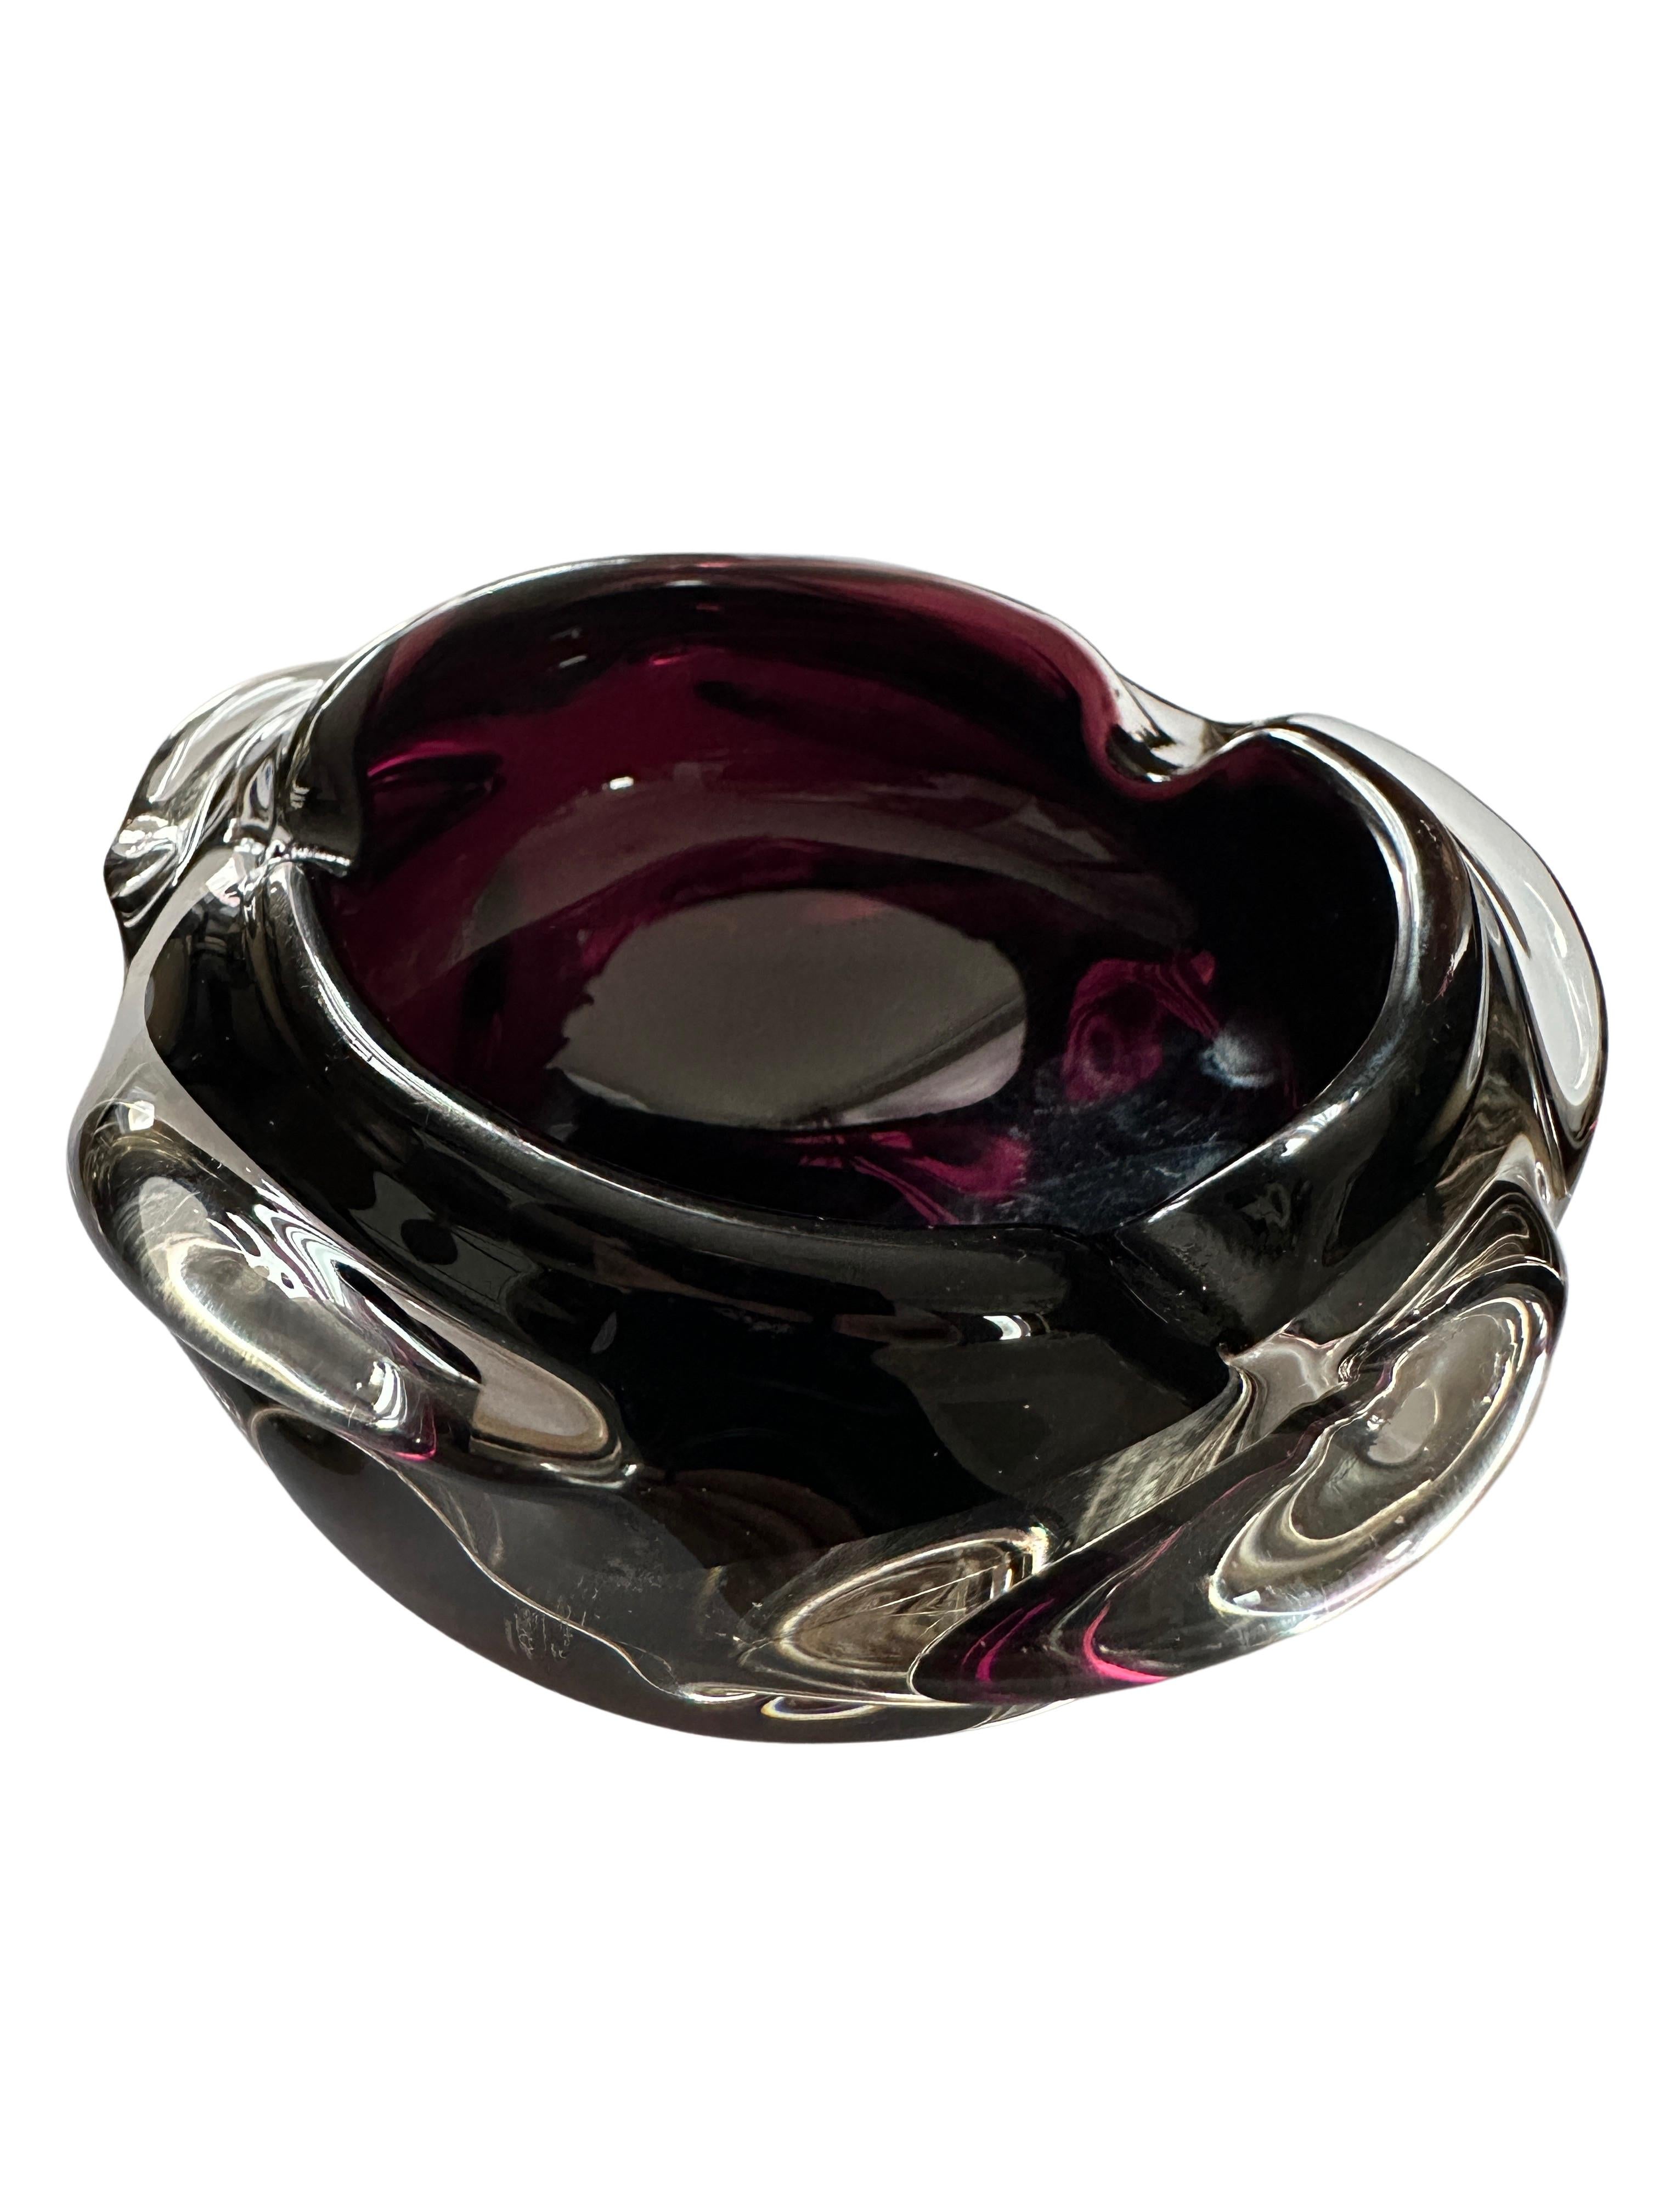 Mid-Century Modern Midcentury Bowl in Dark Burgundy Color, 1960s For Sale